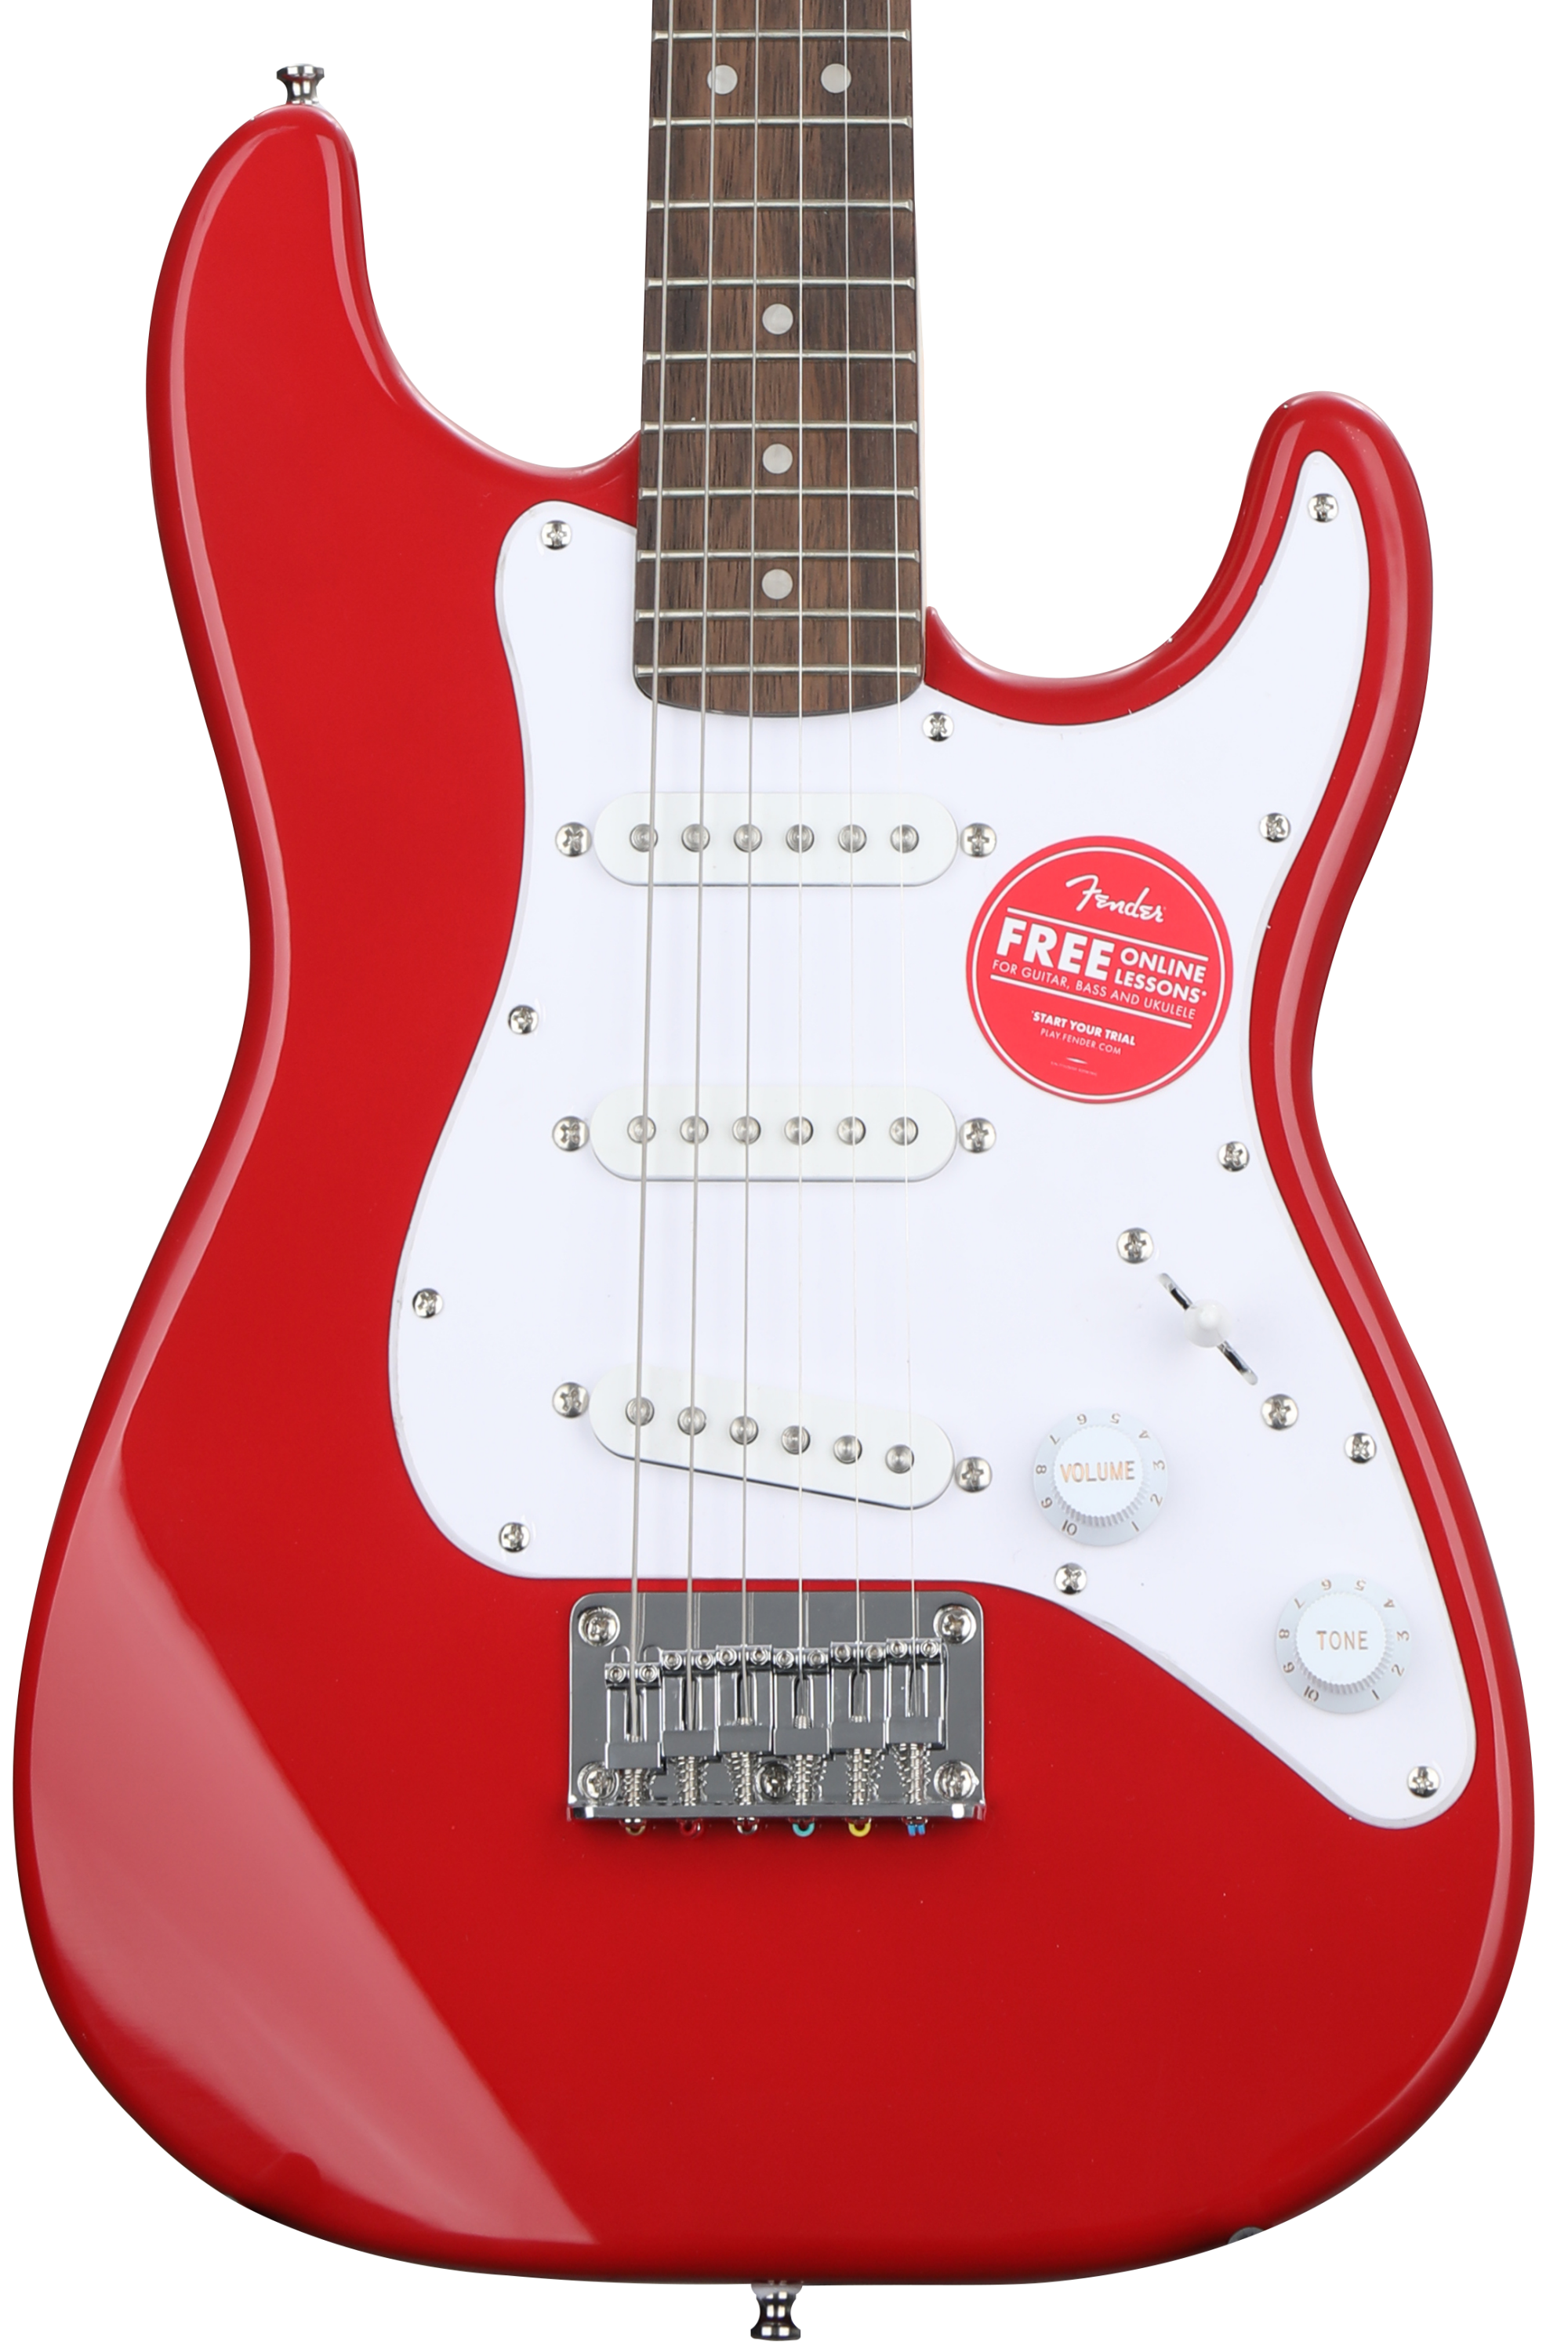 Bundled Item: Squier Mini Stratocaster Electric Guitar - Dakota Red with Laurel Fingerboard